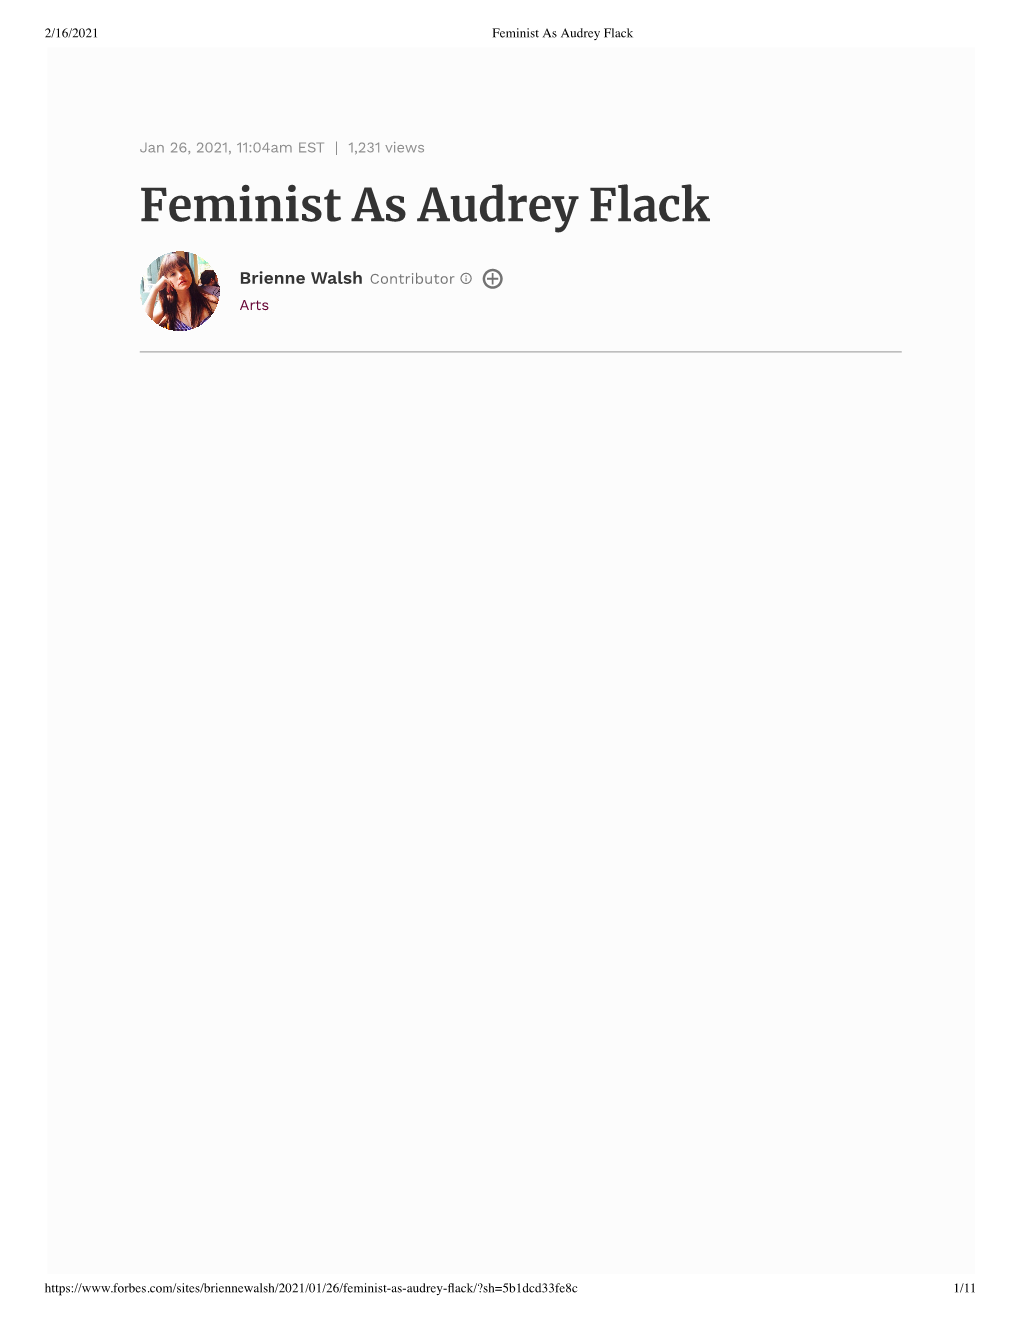 Feminist As Audrey Flack